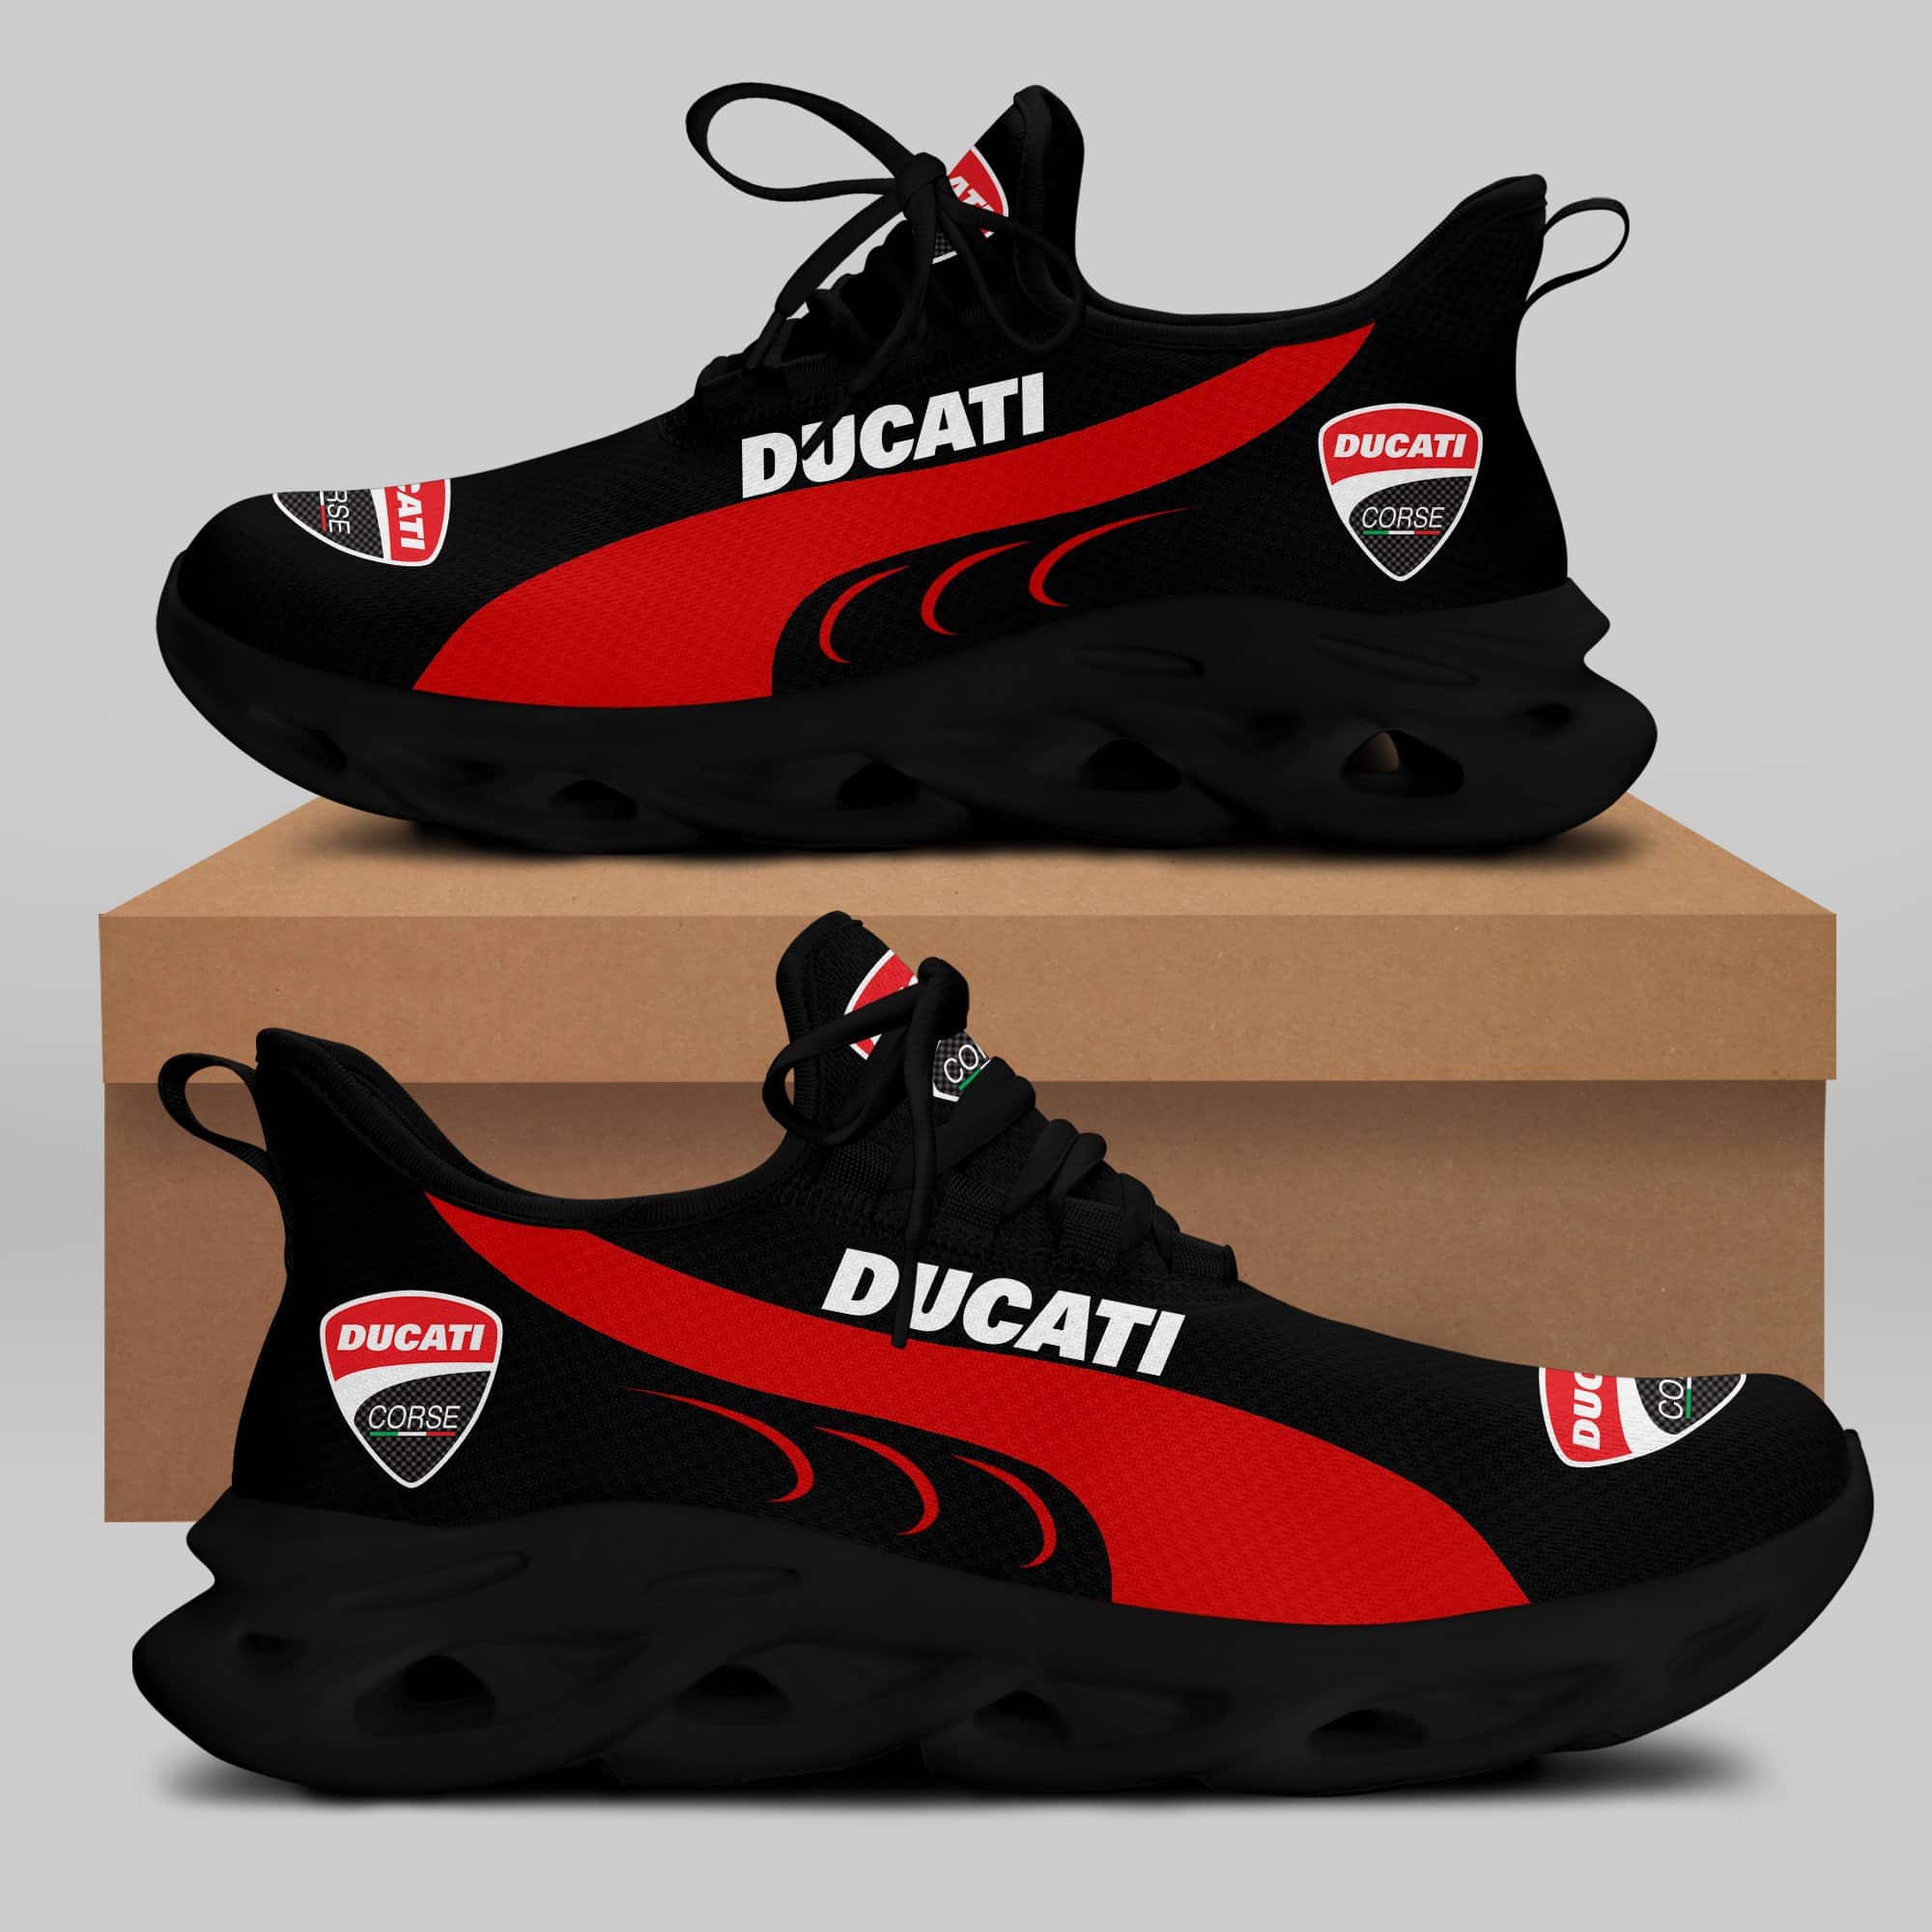 Ducati Racing Running Shoes Max Soul Shoes Sneakers Ver 57 1